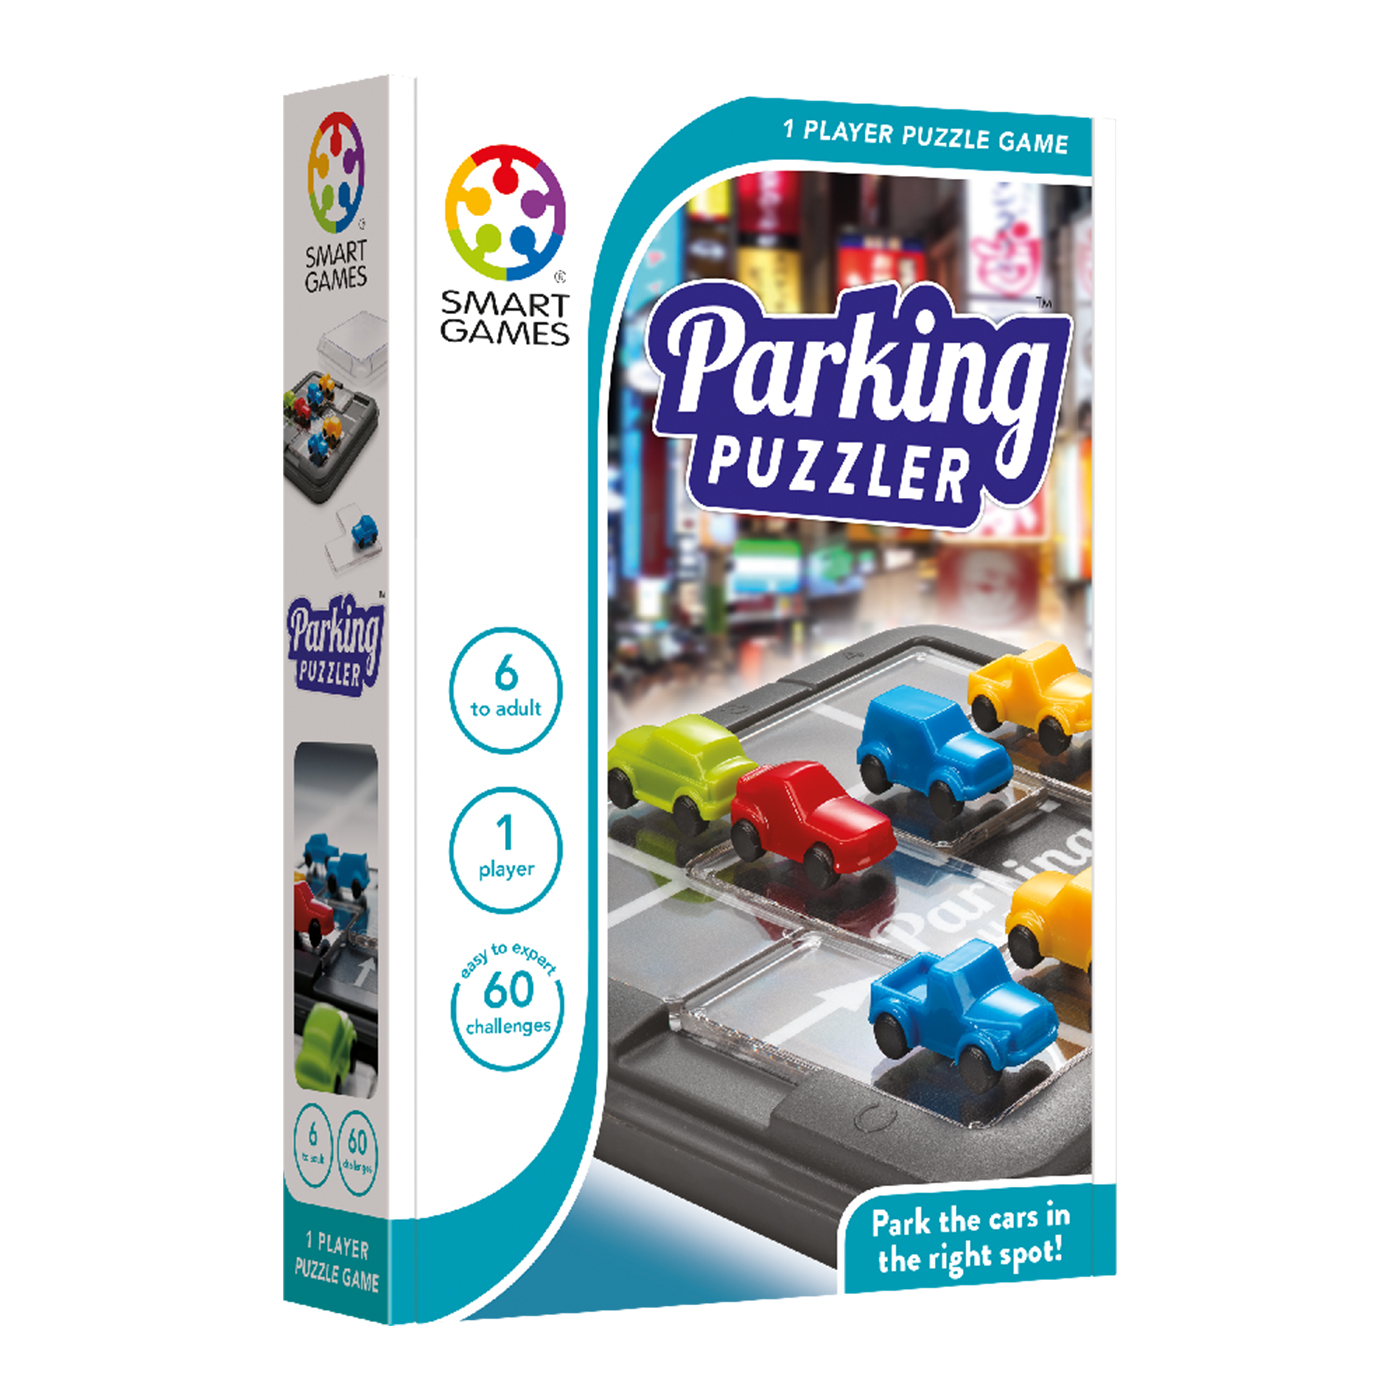  SmartGames Parking Puzzler